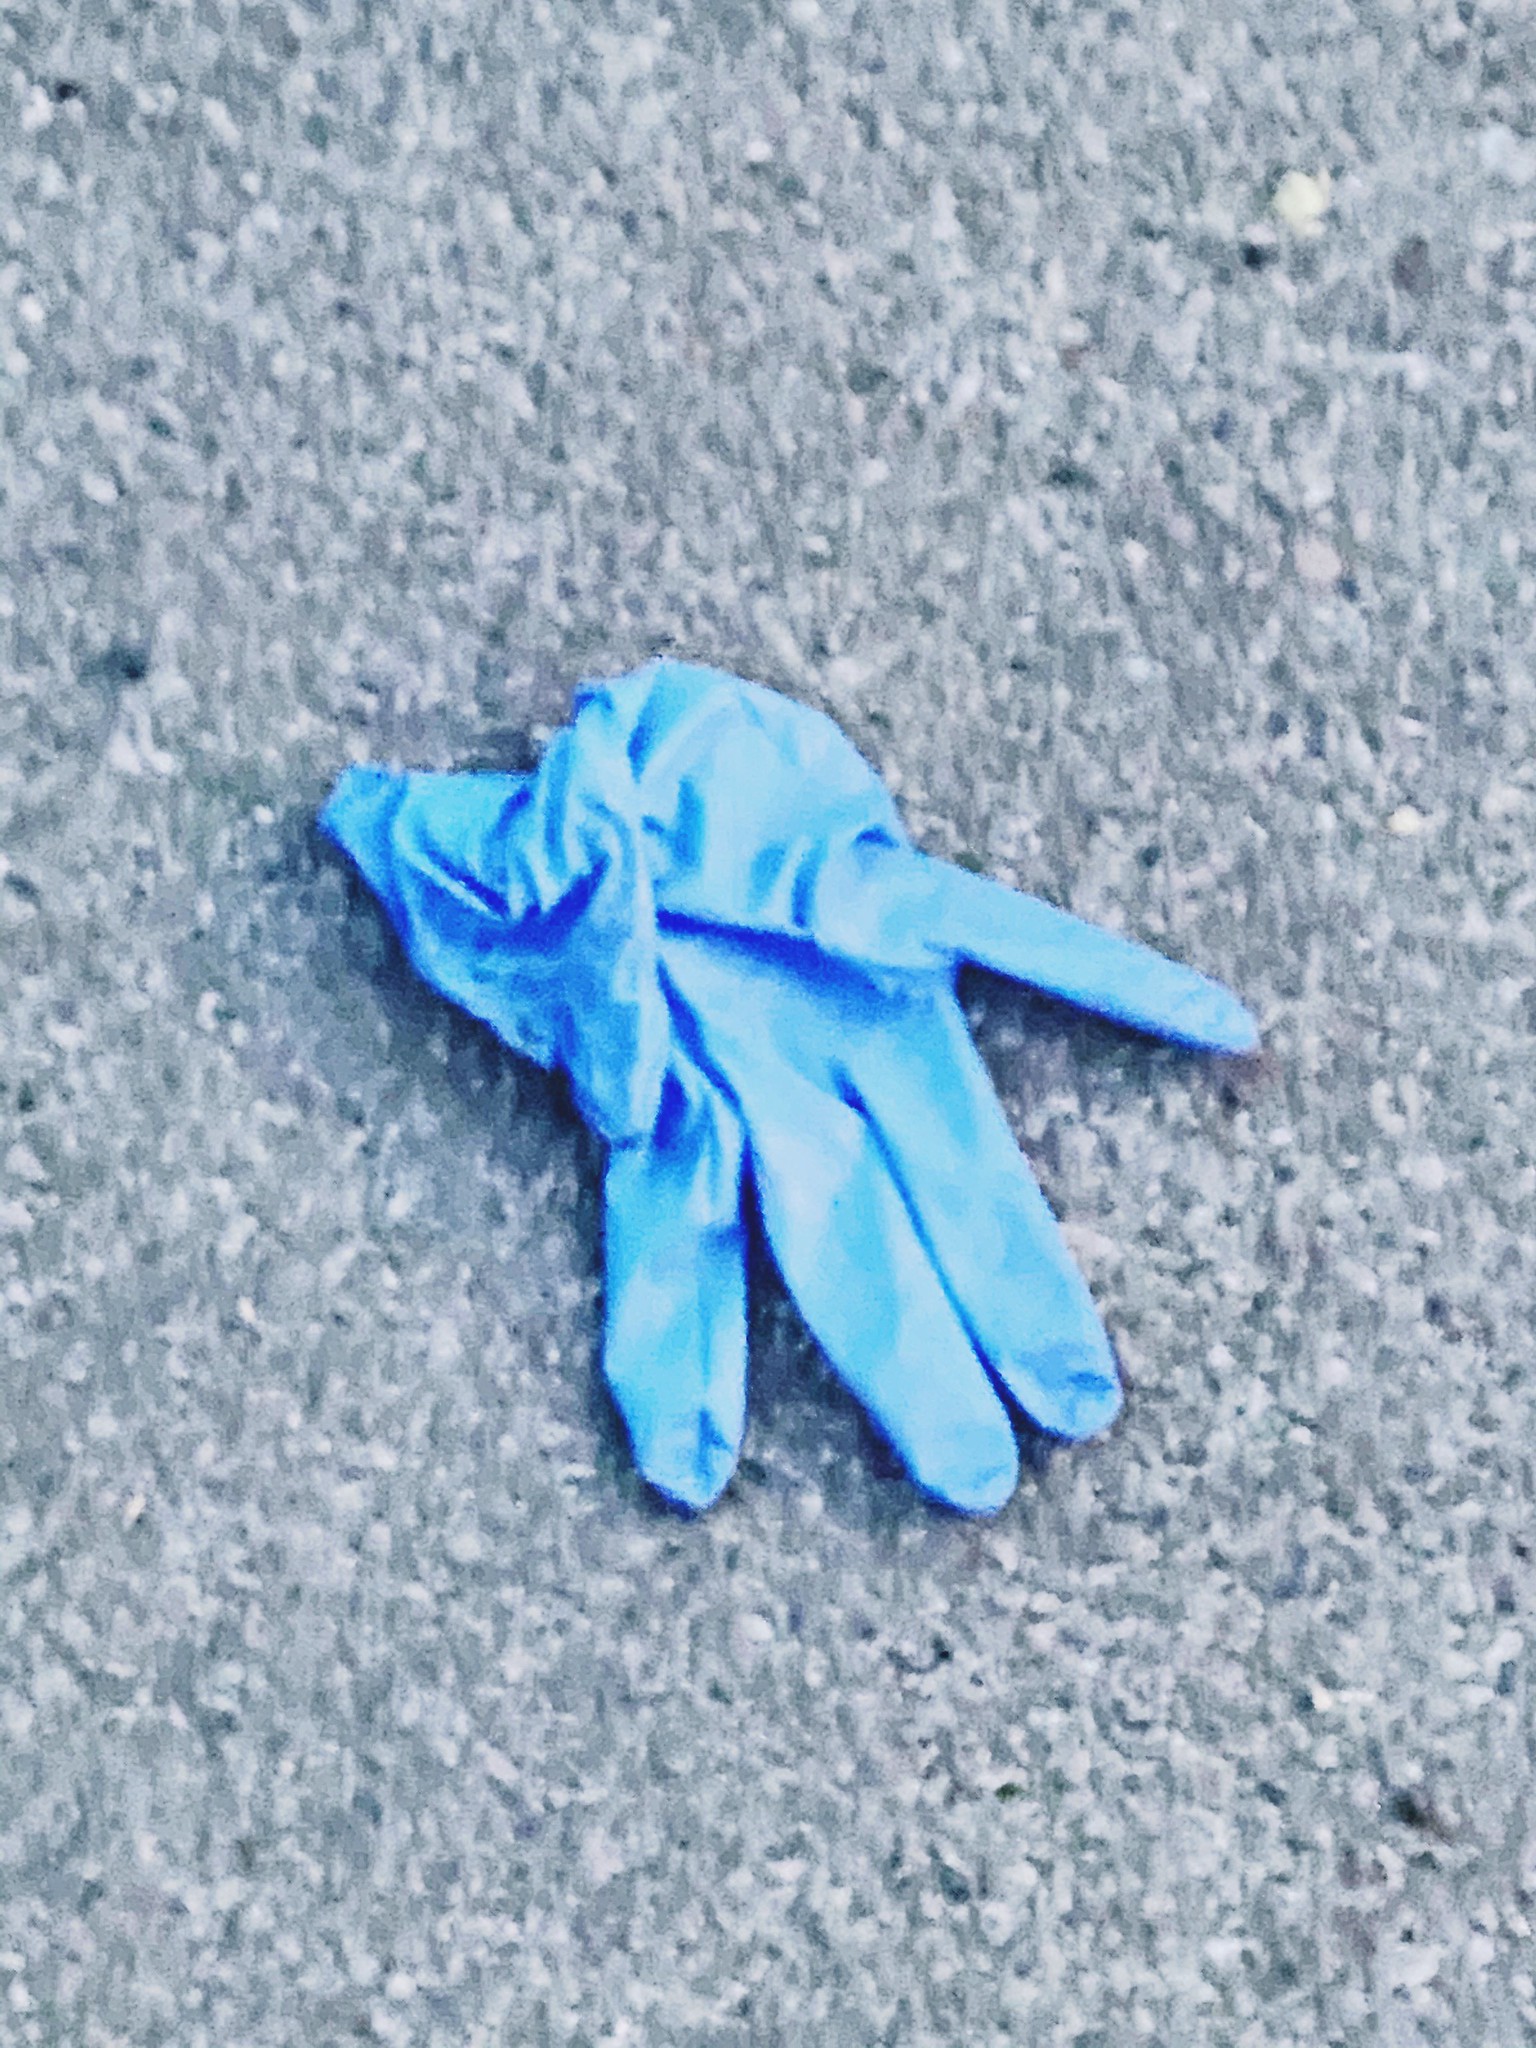 Discarded corona glove